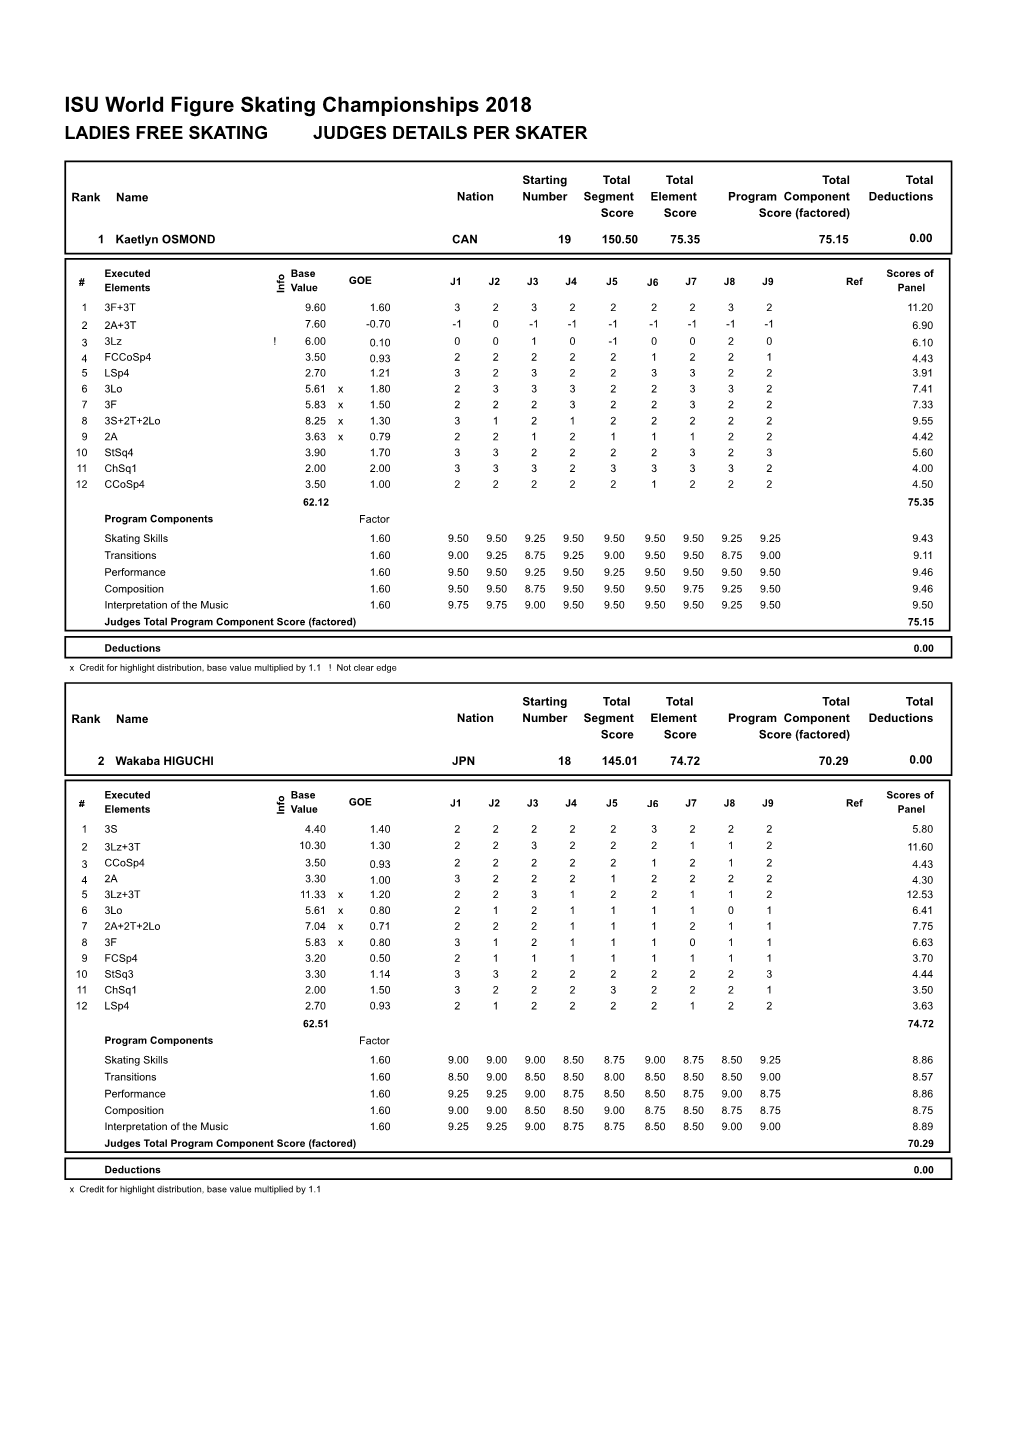 ISU World Figure Skating Championships 2018 LADIES FREE SKATING JUDGES DETAILS PER SKATER